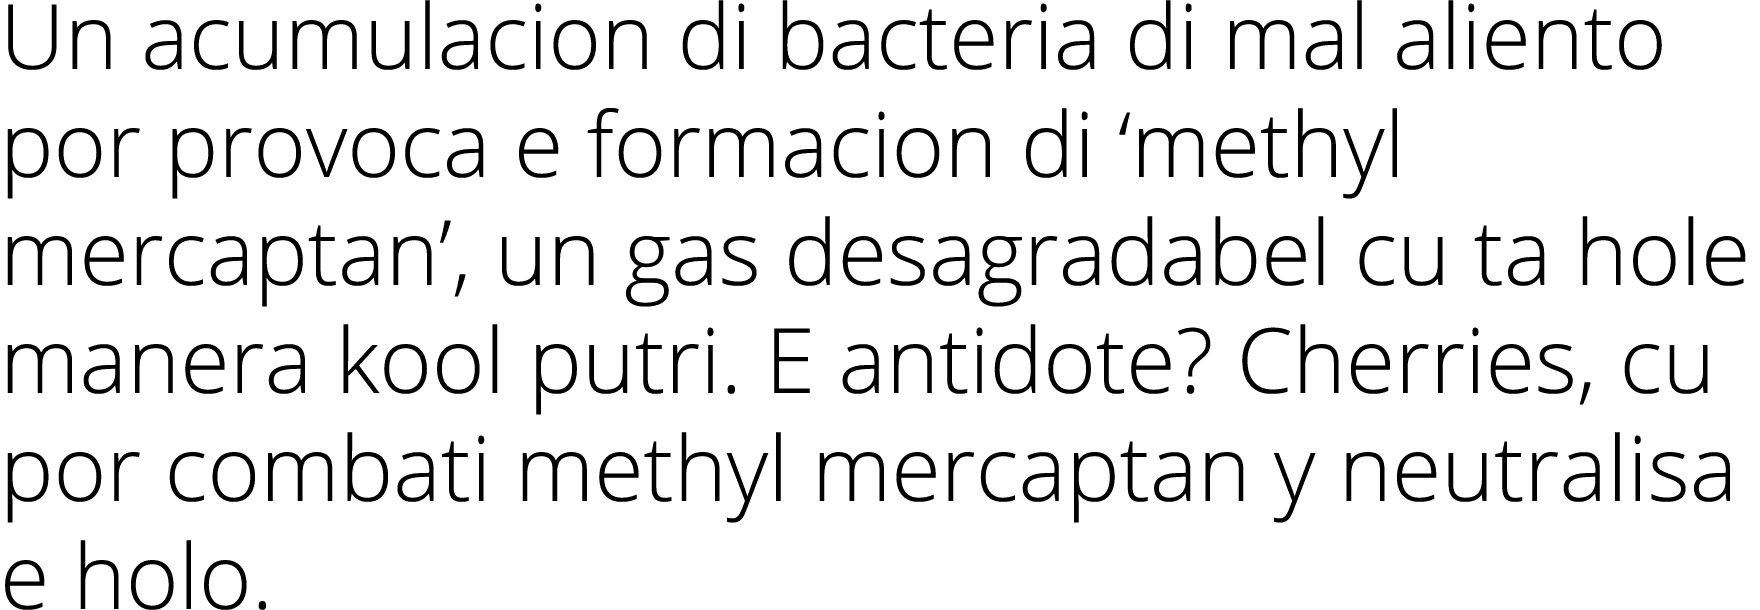 Un acumulacion di bacteria di mal aliento por provoca e formacion di  methyl mercaptan , un gas desagradabel cu ta ho   